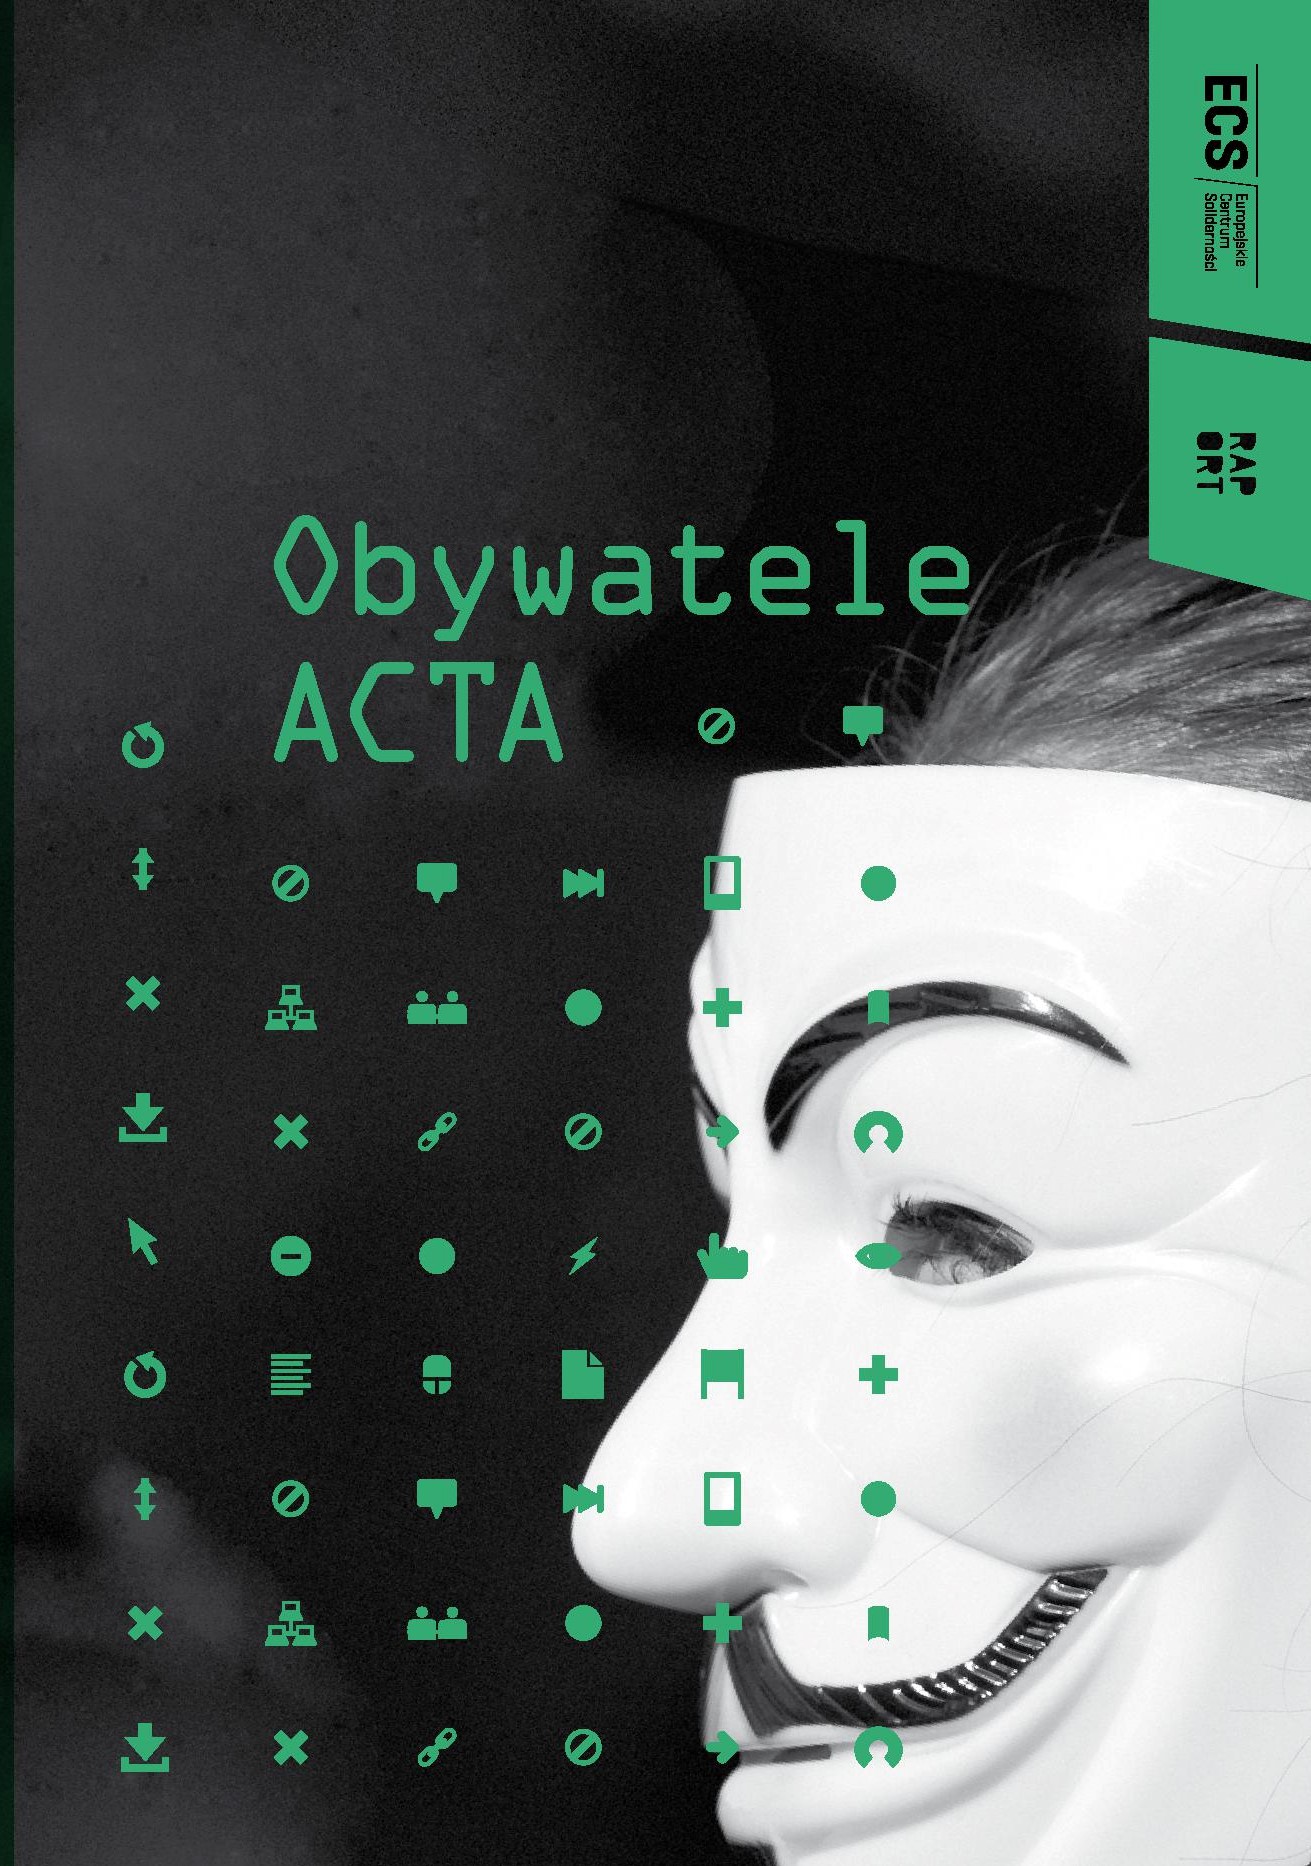 Obywatele ACTA